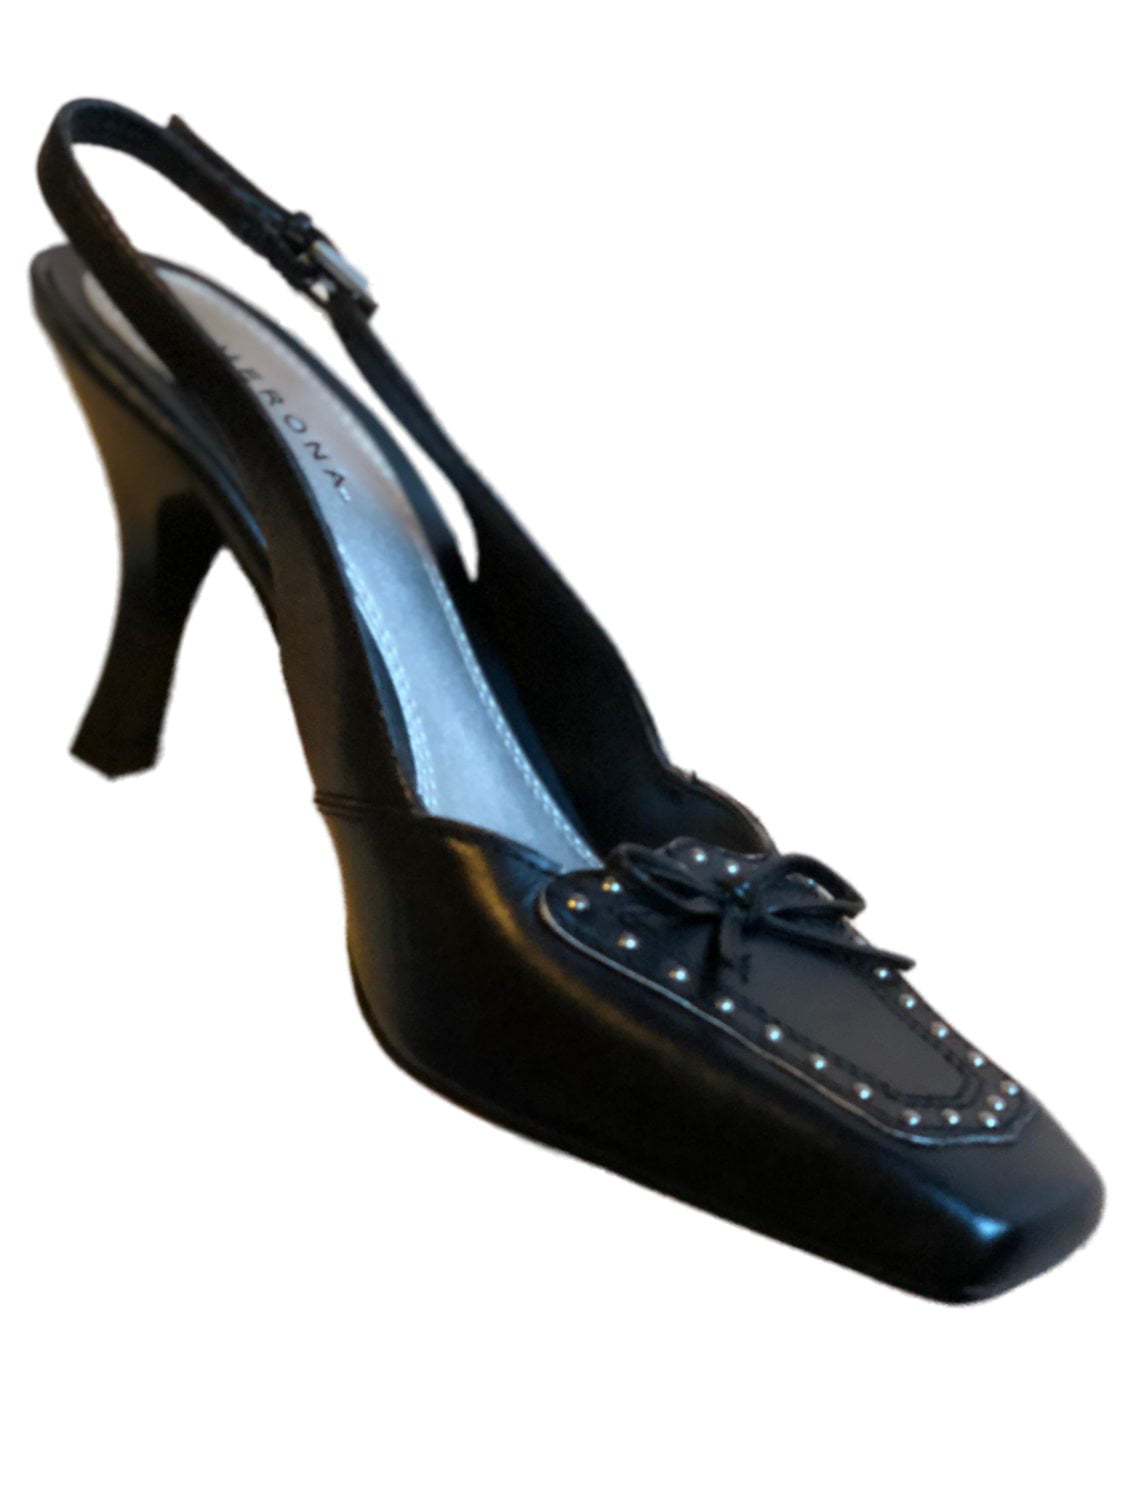 womens dress shoes 3 inch heels